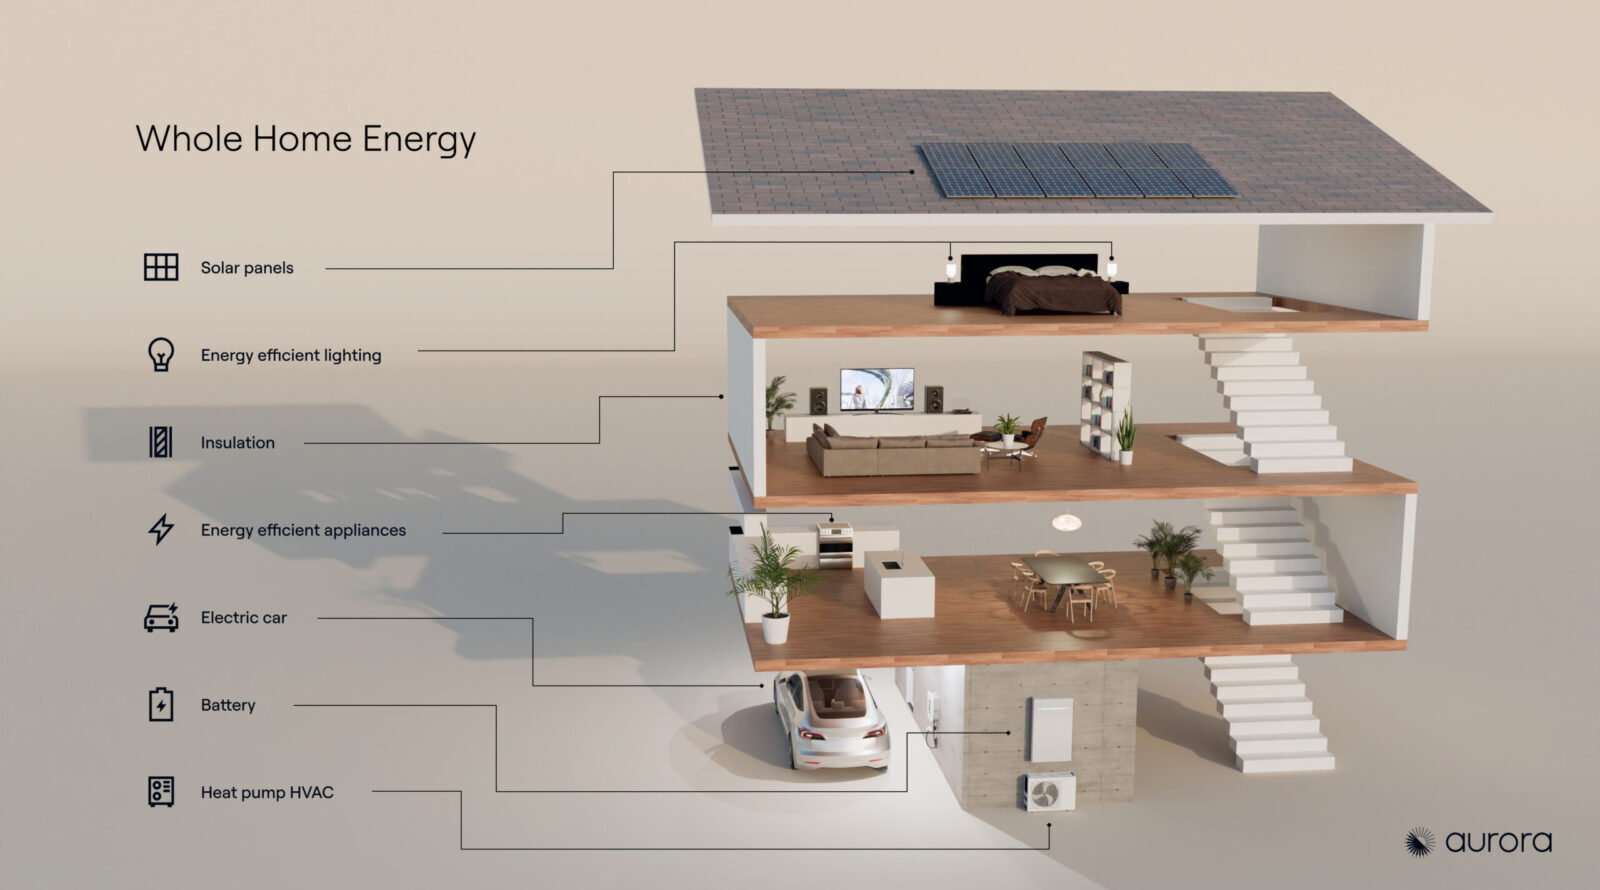 Aurora Solar Announces Whole Home Energy Management: Expanding Beyond Solar to Address Homeowners Electrification & Energy Needs [Video]